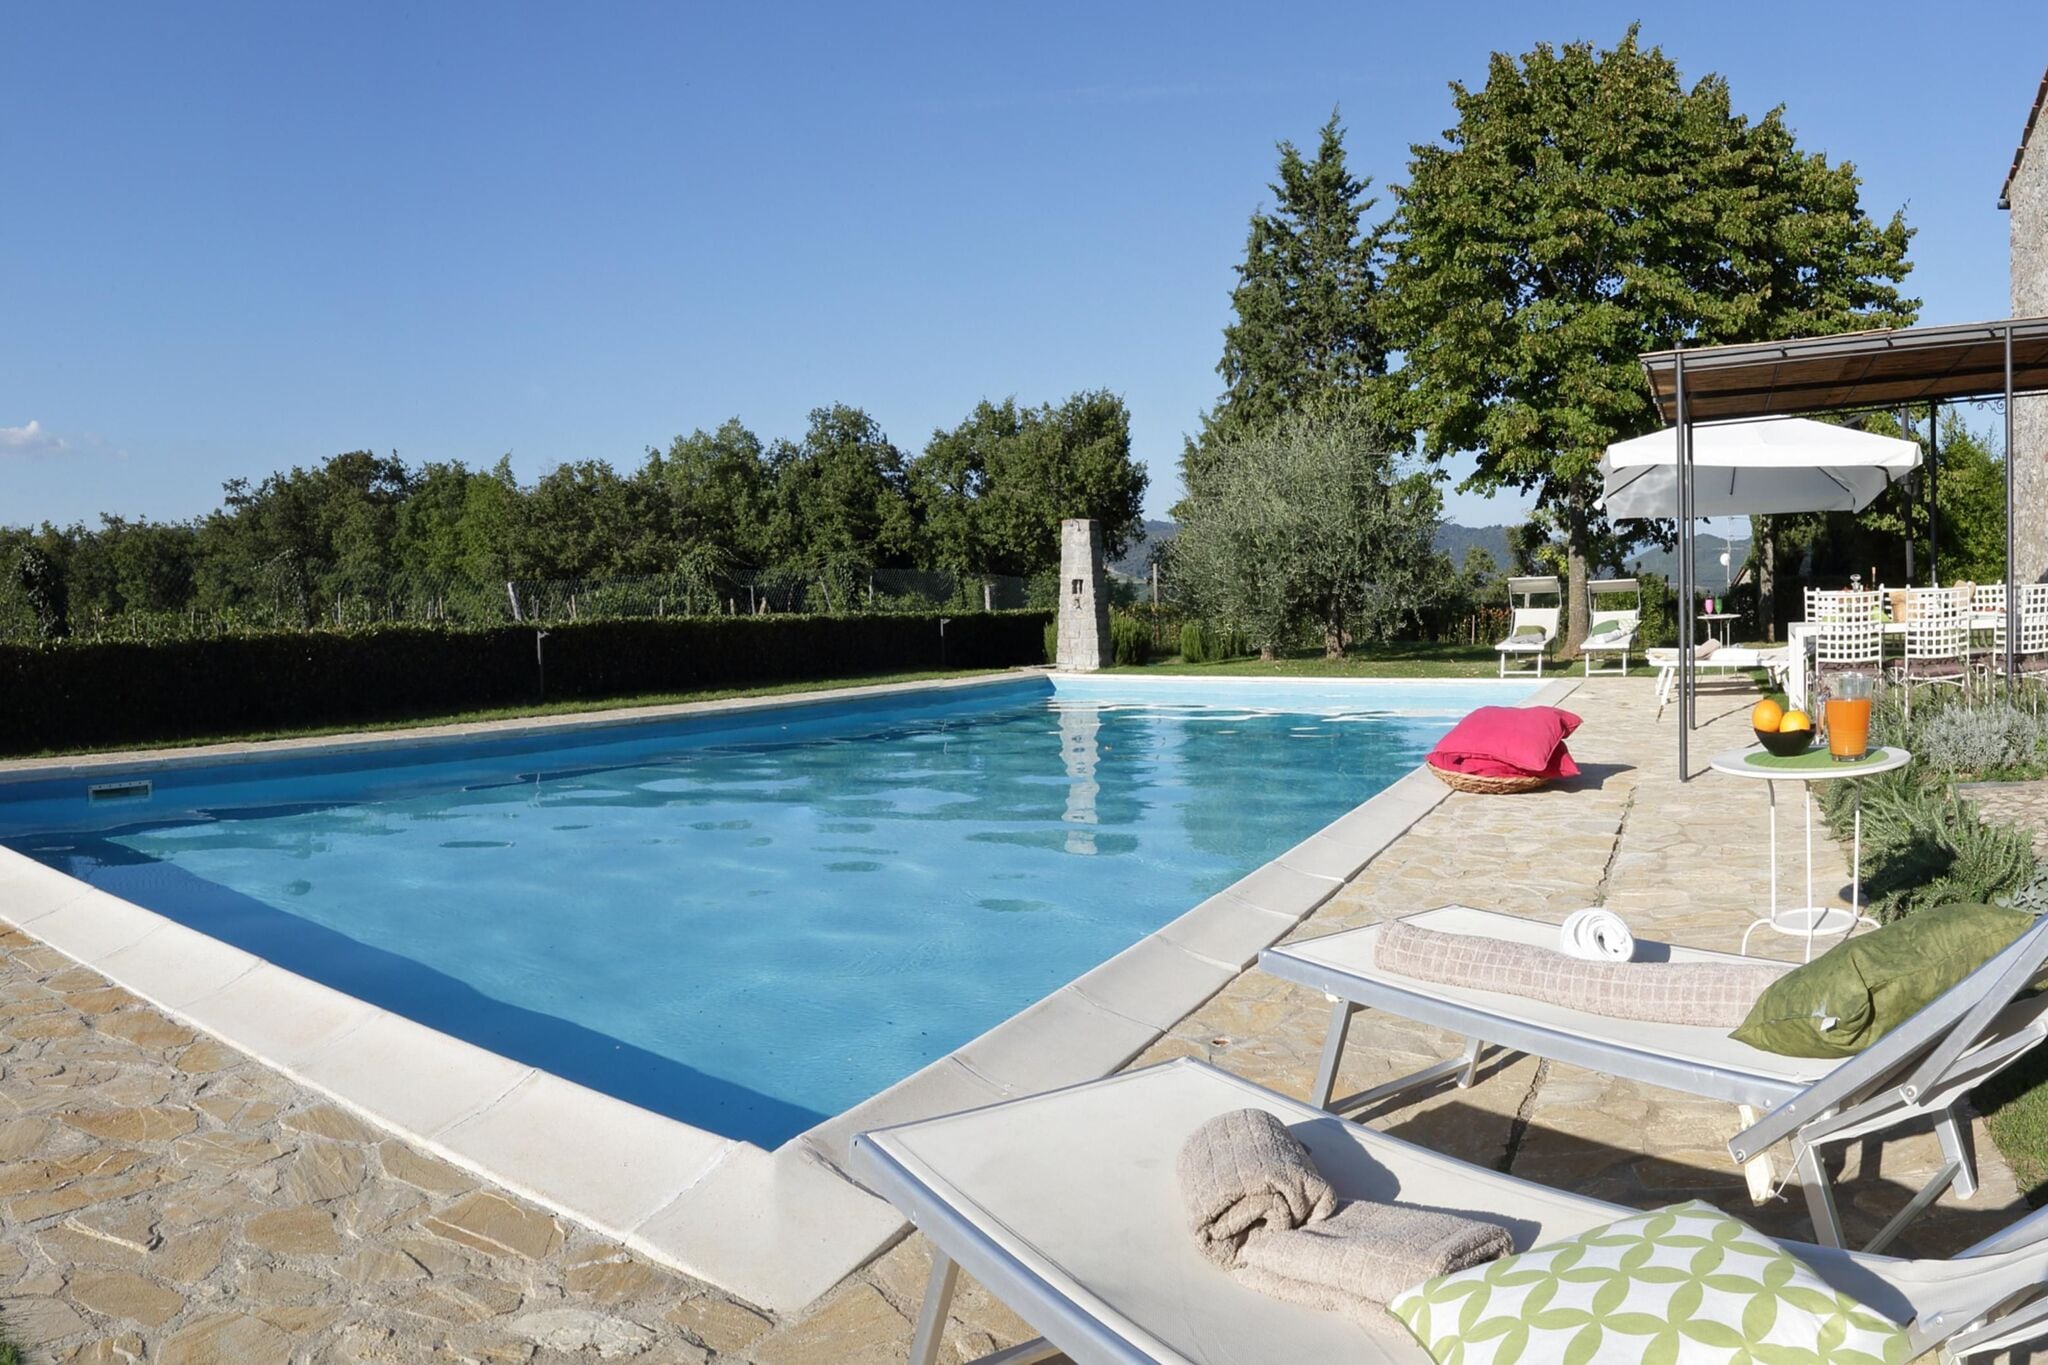 Villa in Gaiole in Chianti mit privatem Pool